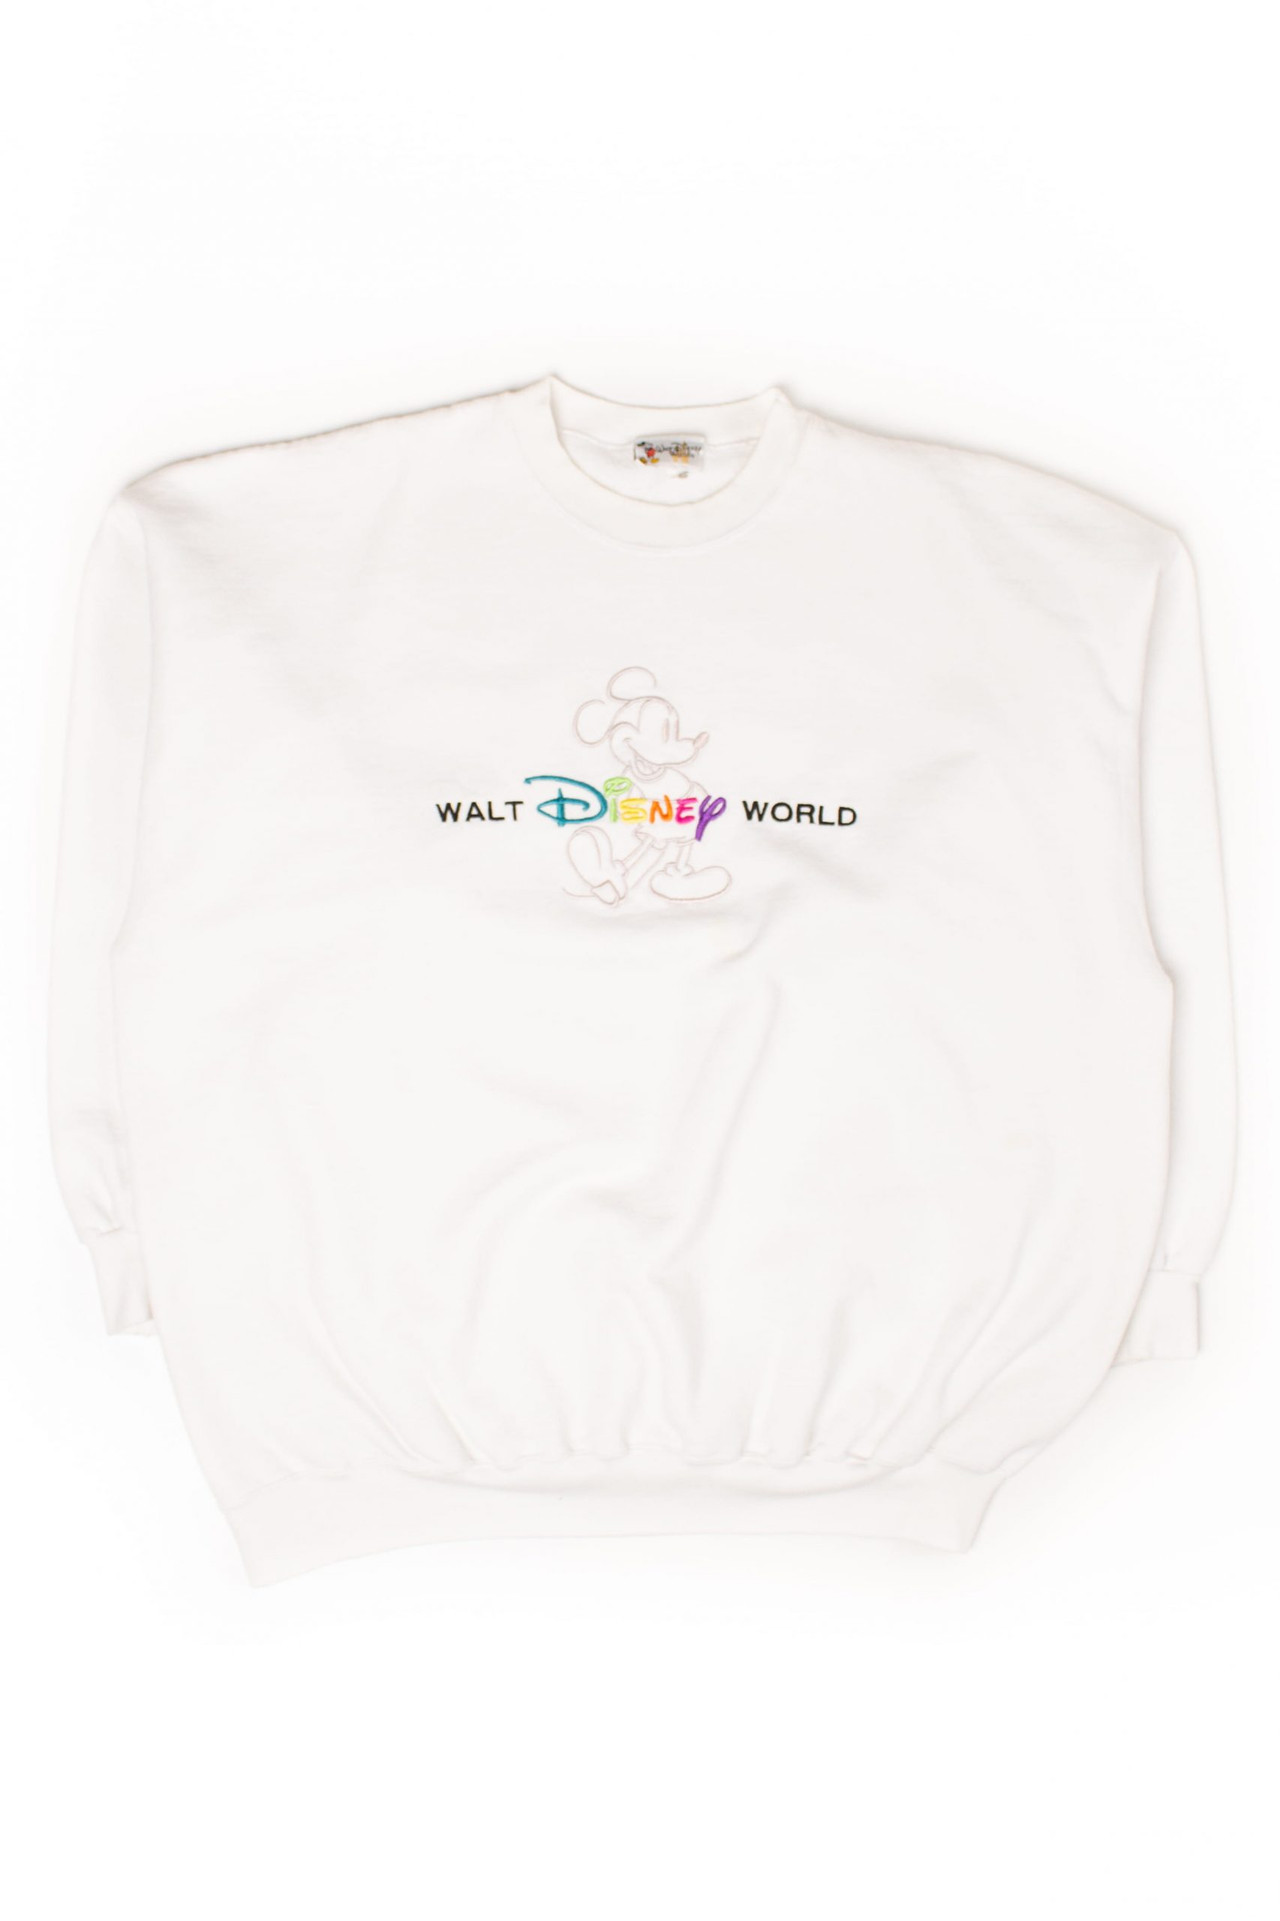 Vintage Rainbow Walt Disney World Sweatshirt (1990s) - Ragstock.com